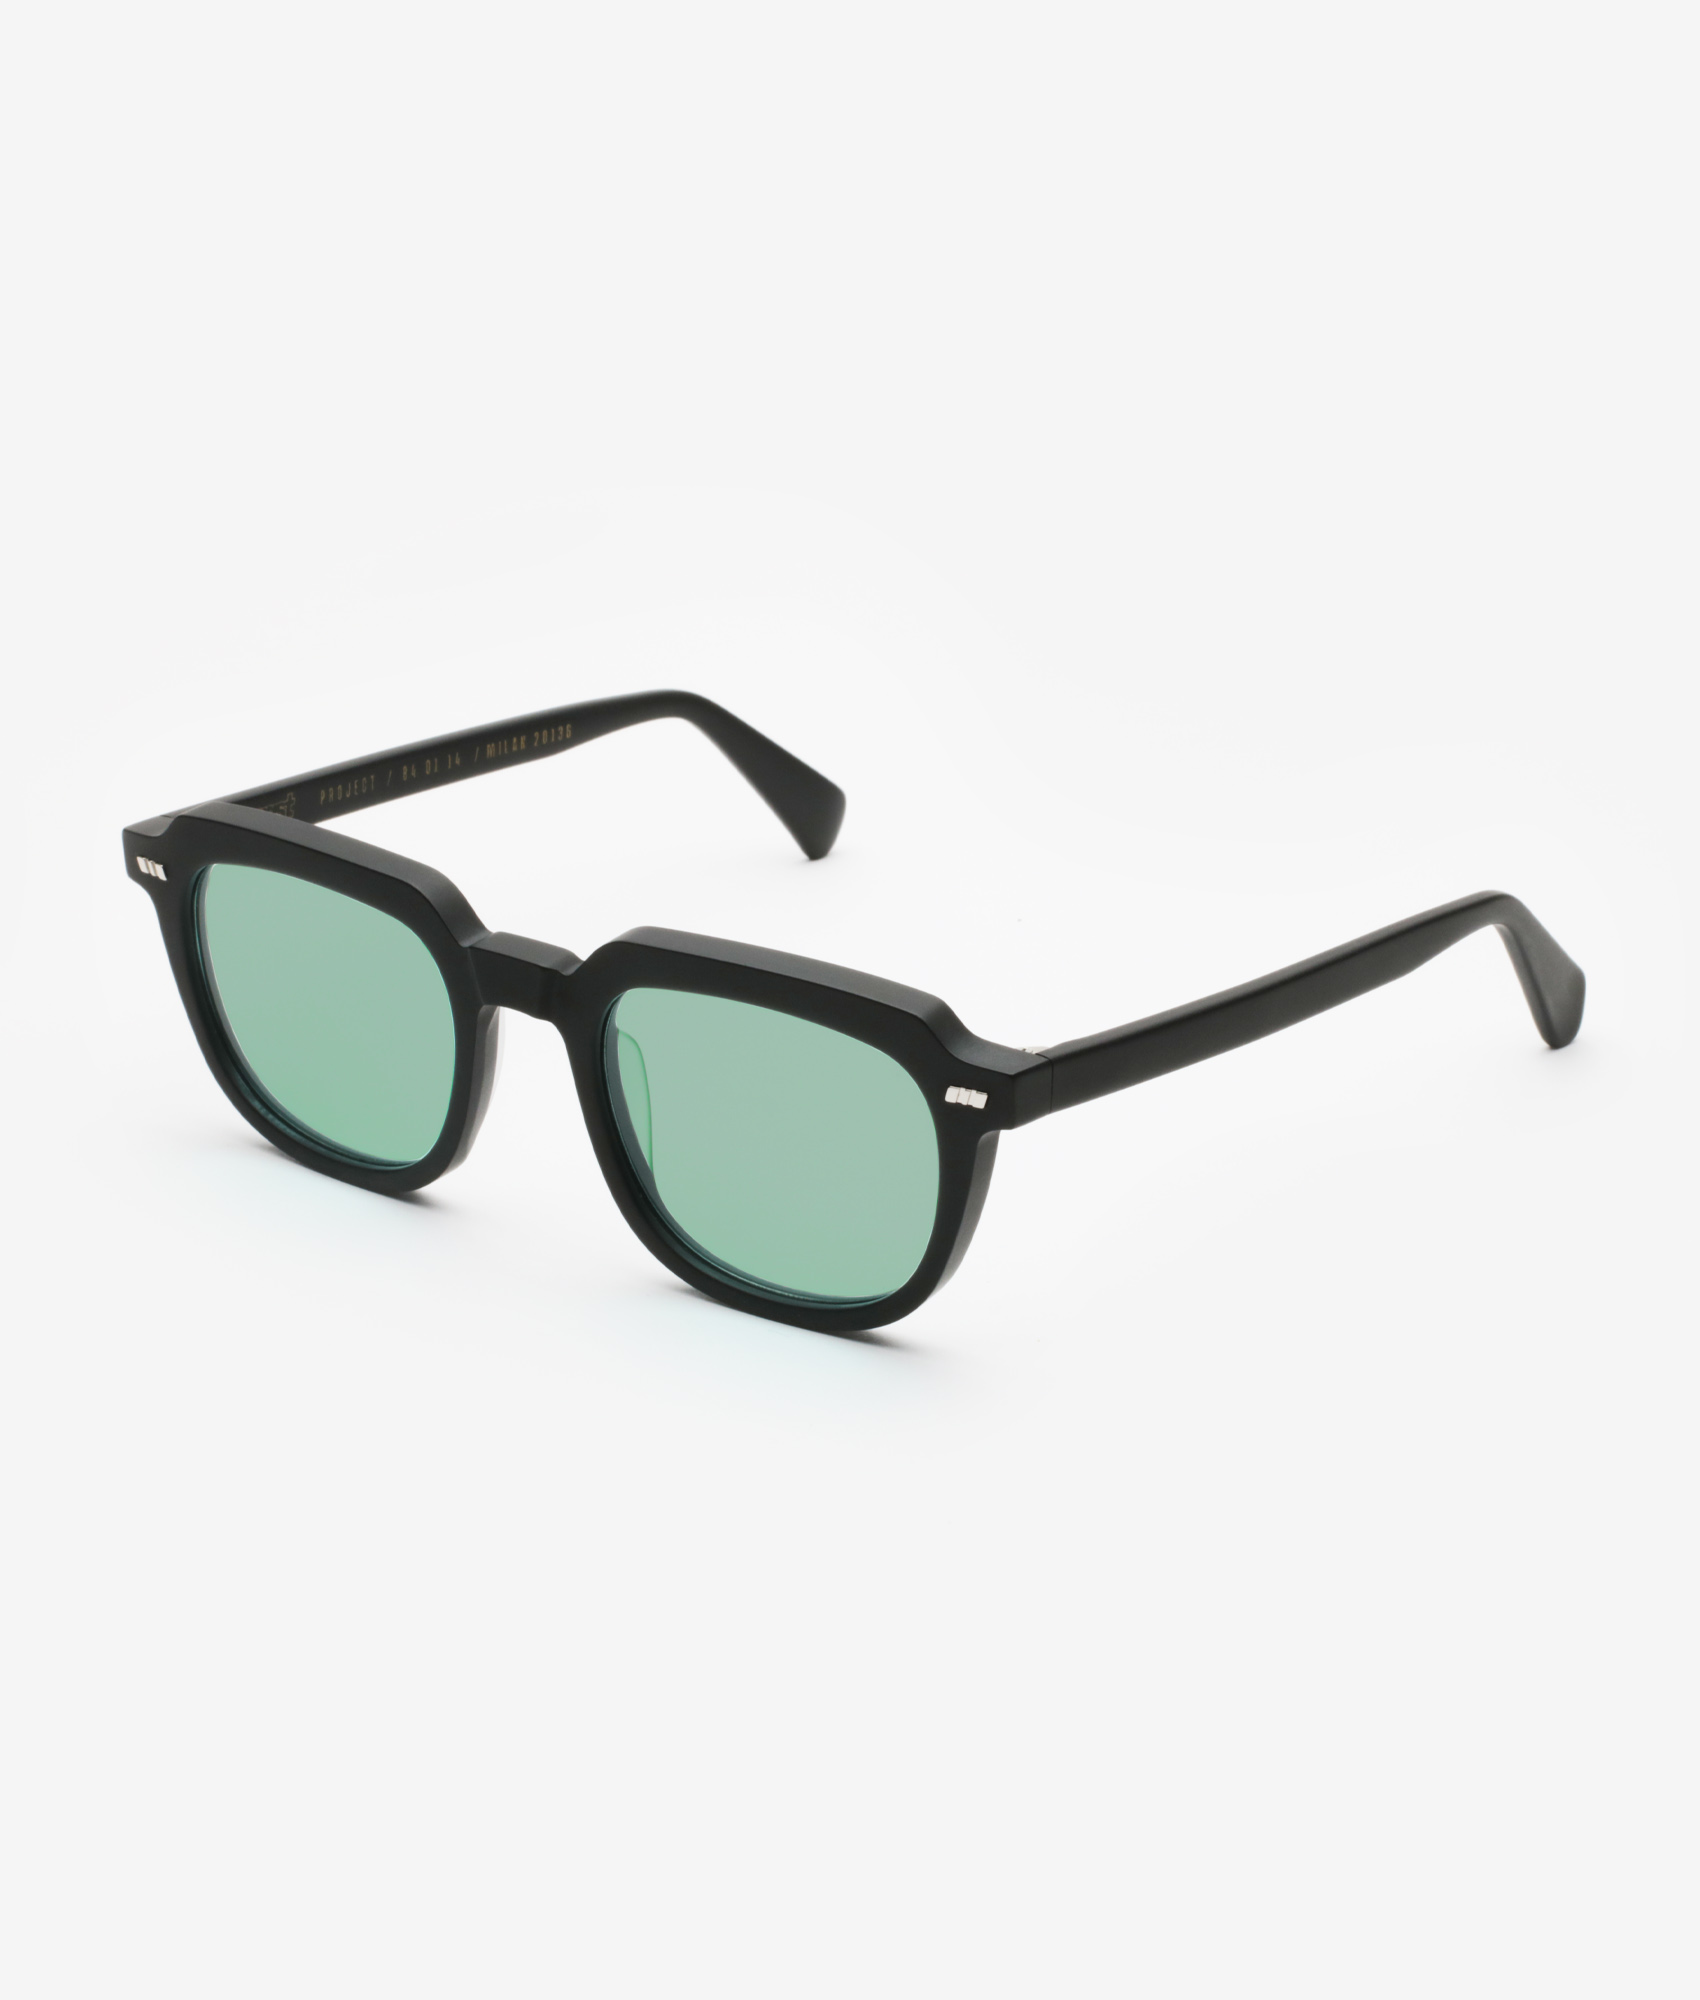 DAIL Mint-Flavored GAST Sunglasses